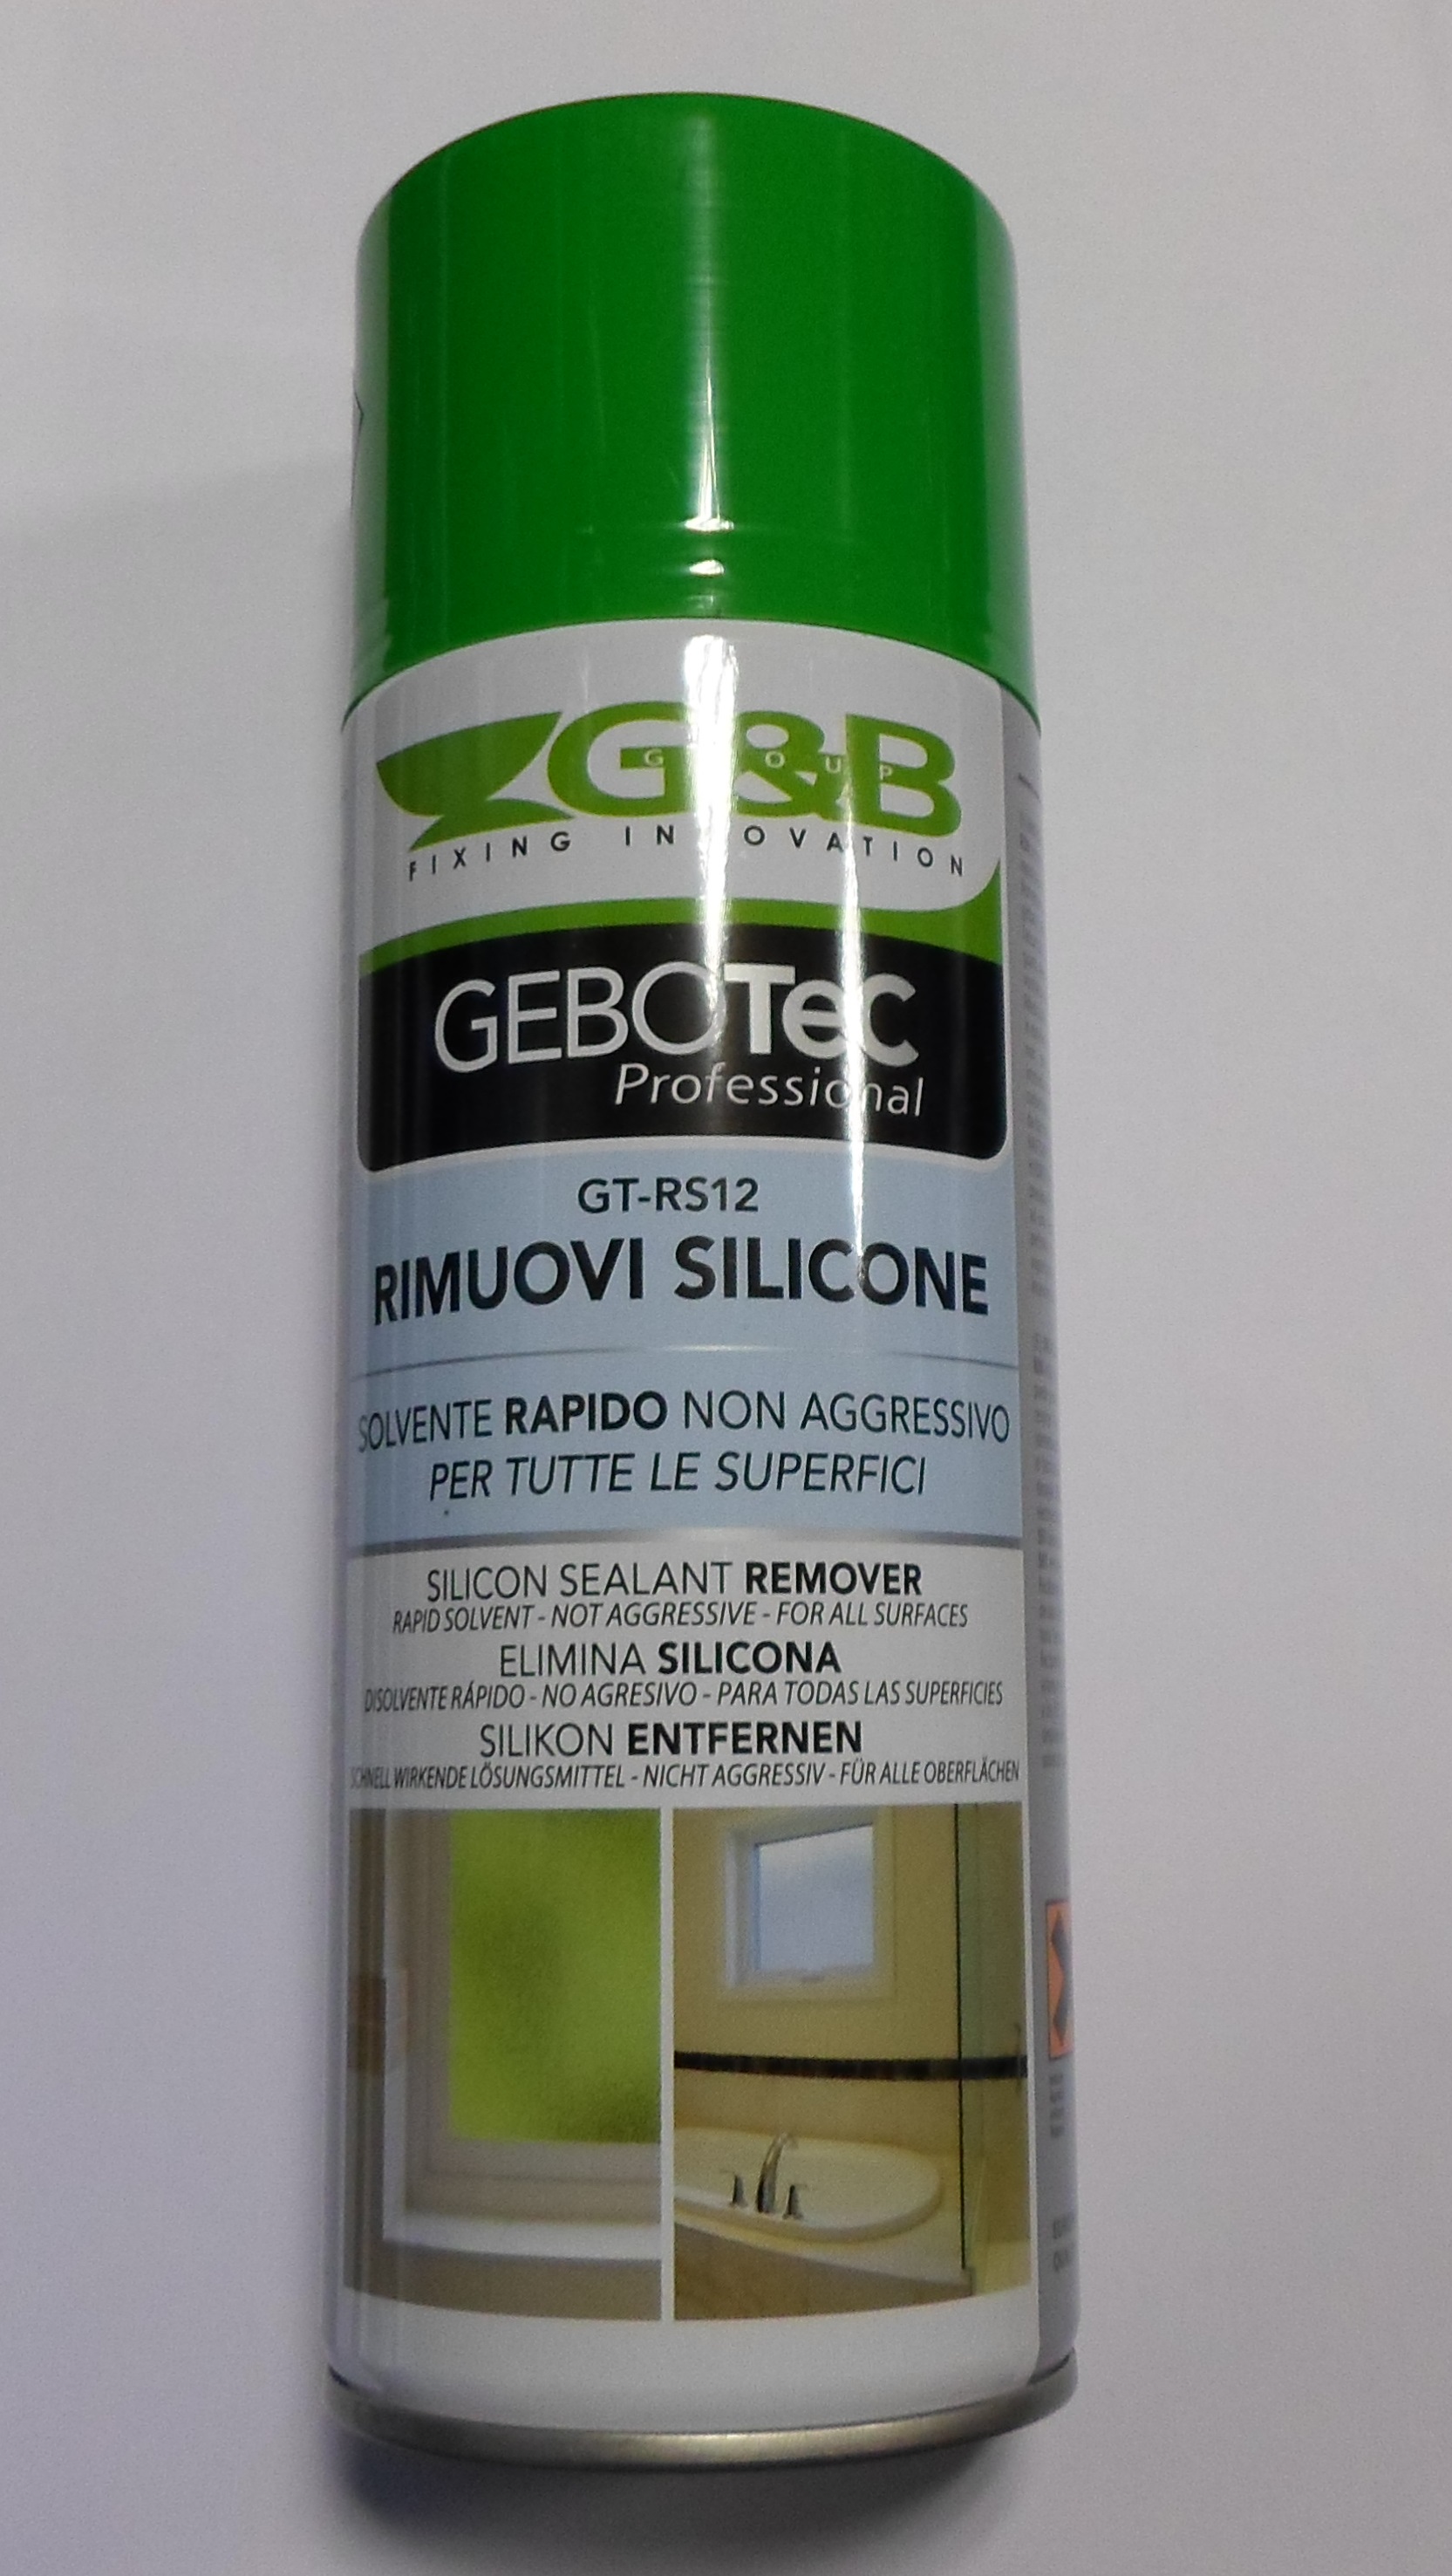 Rimuovi silicone spray gebotec gt-rs12 bomboletta da ml 400 Online